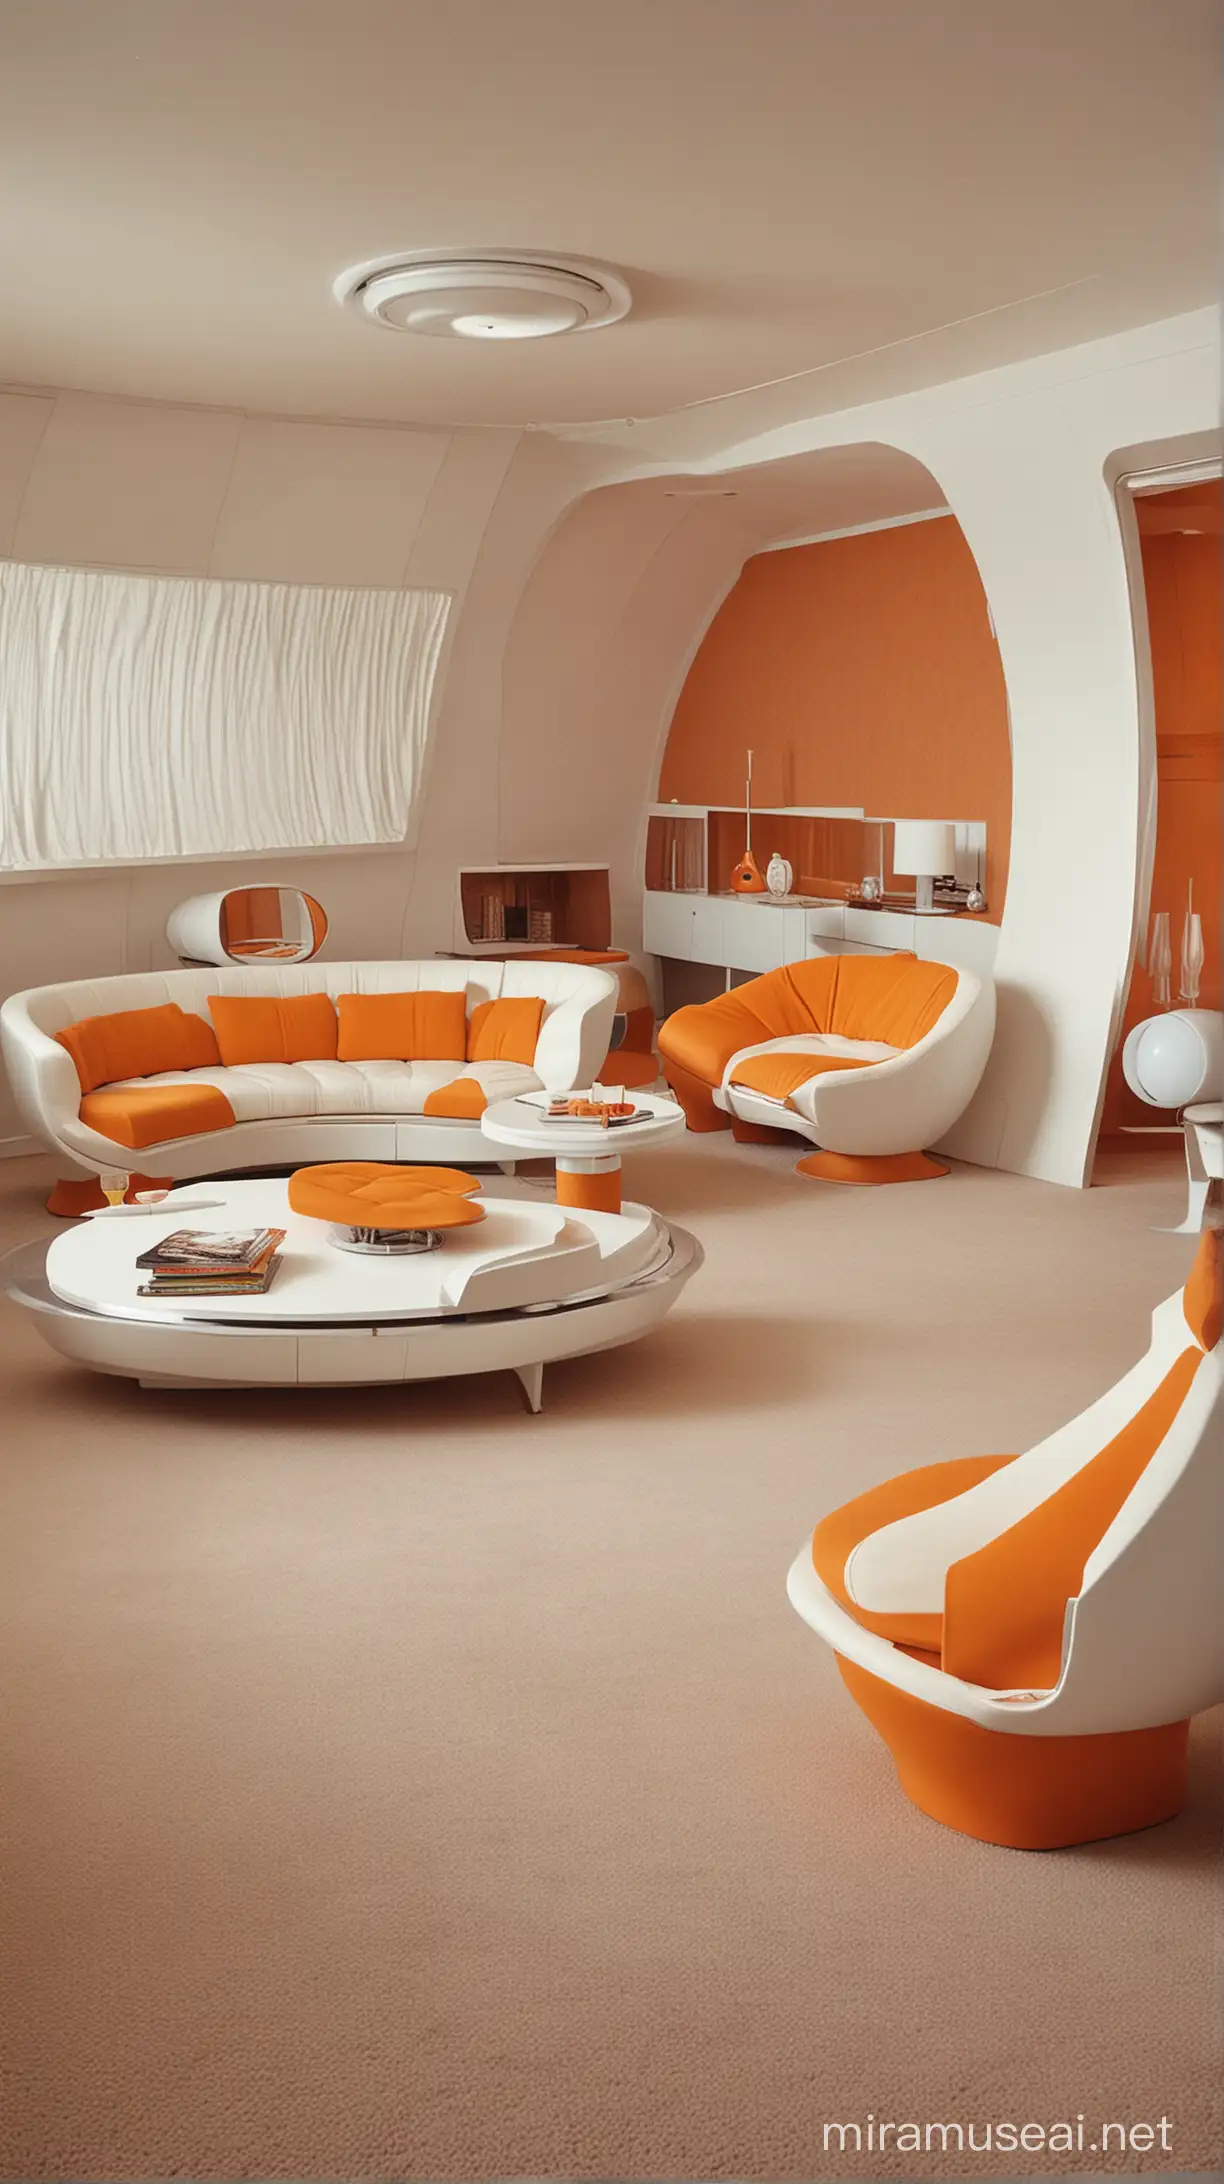 1960s space age minimalistic lounge